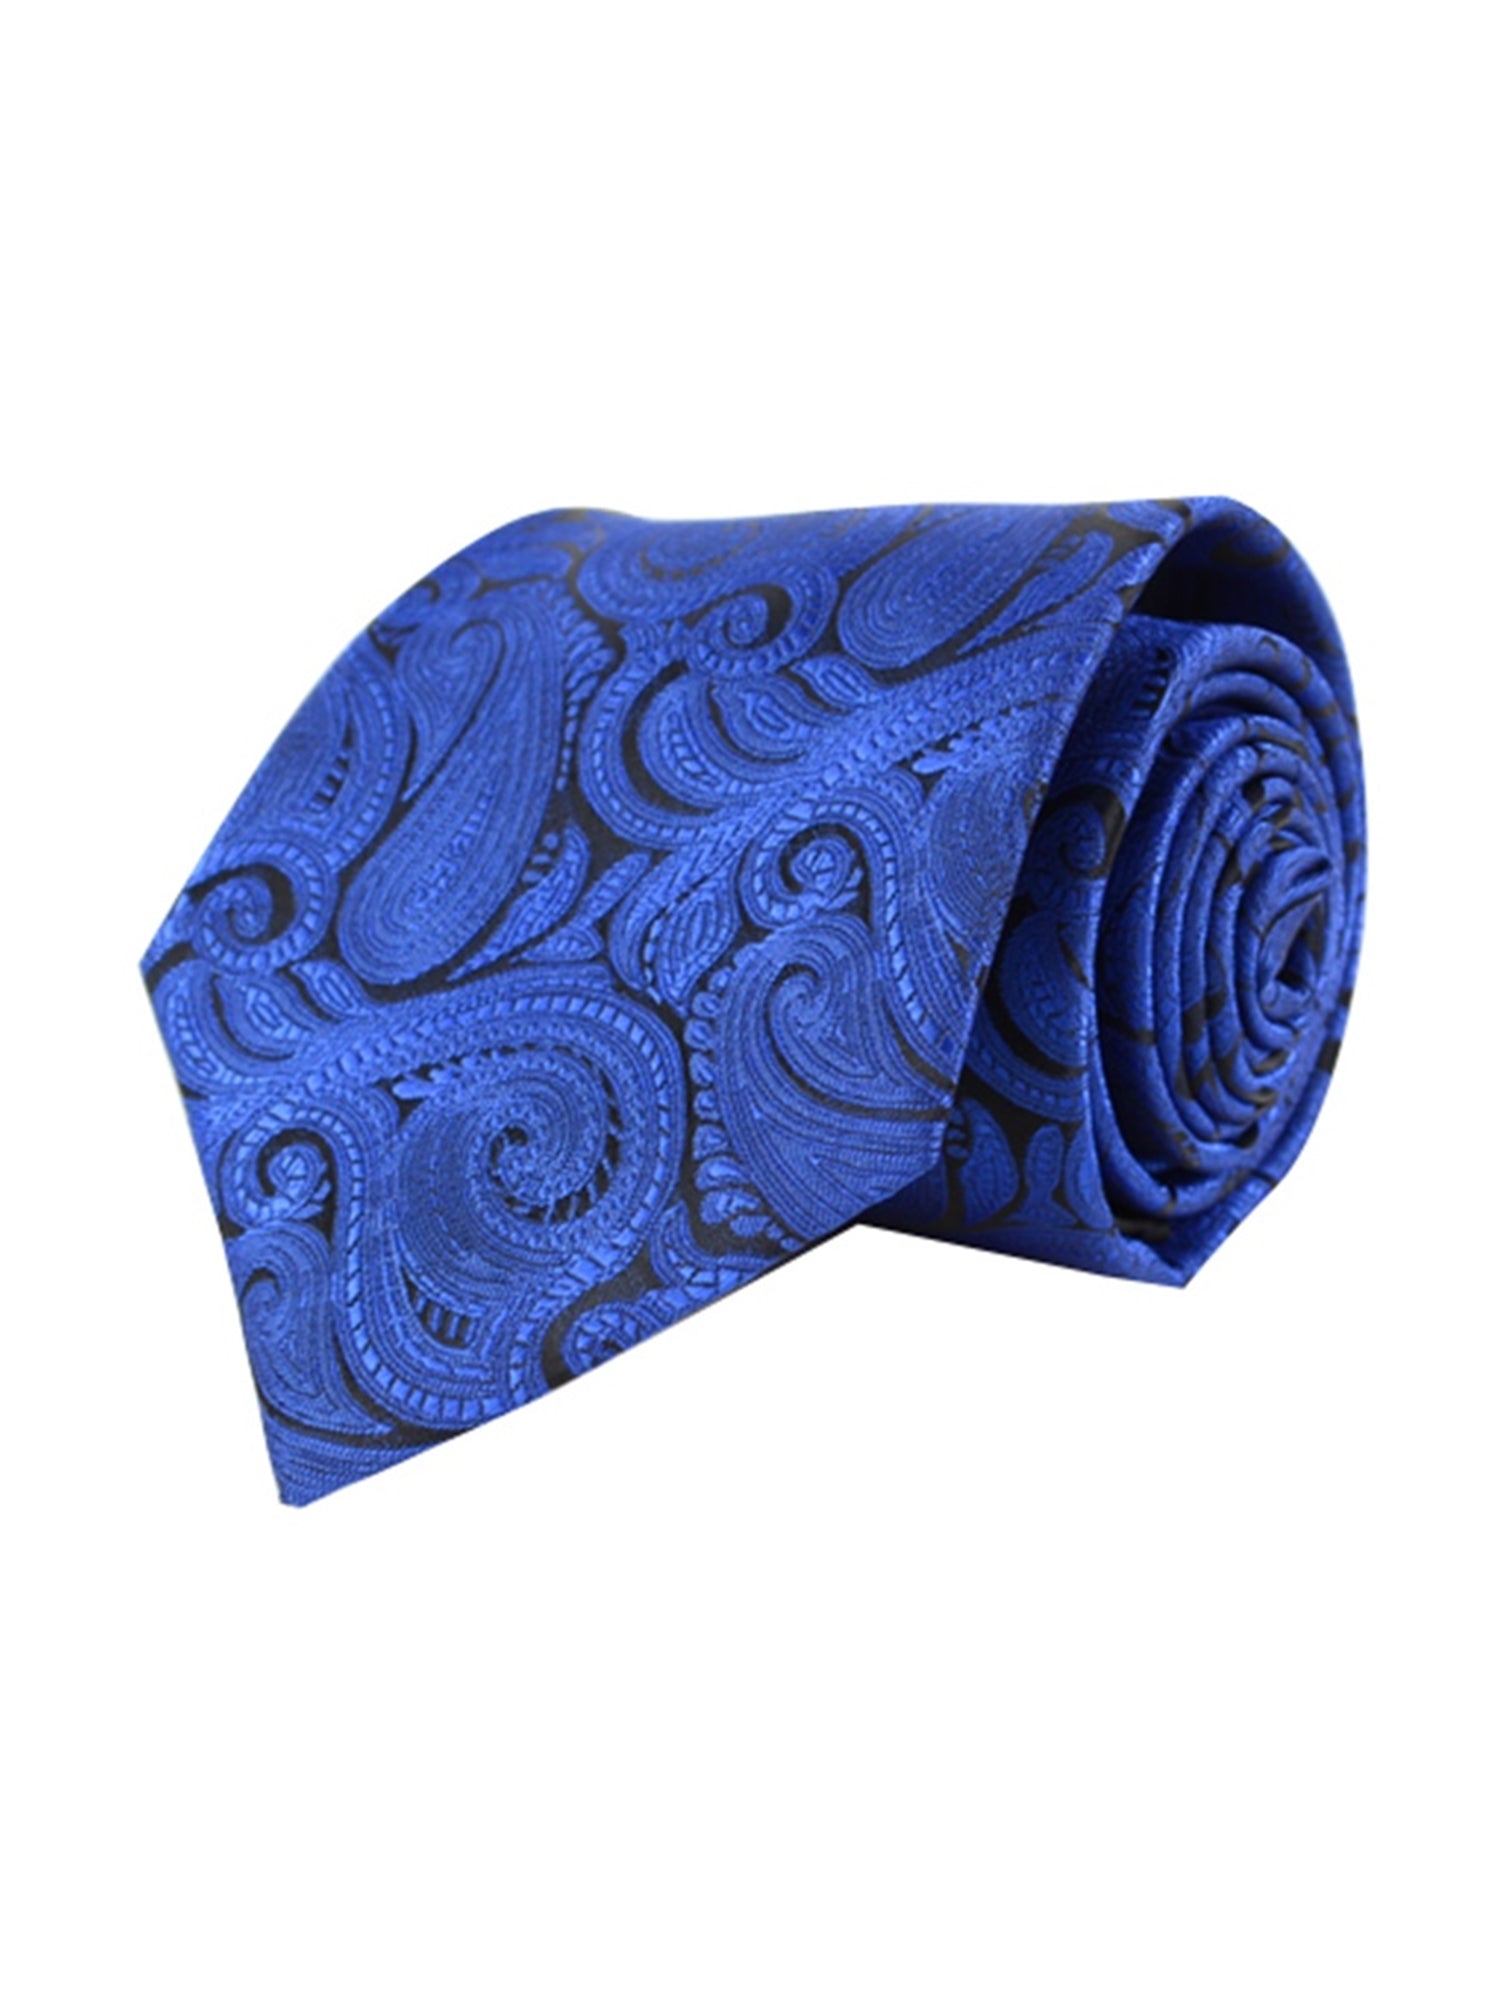 Men's Paisley Microfiber Poly Woven Wedding Neck Tie Neck Tie TheDapperTie Royal Blue Regular 